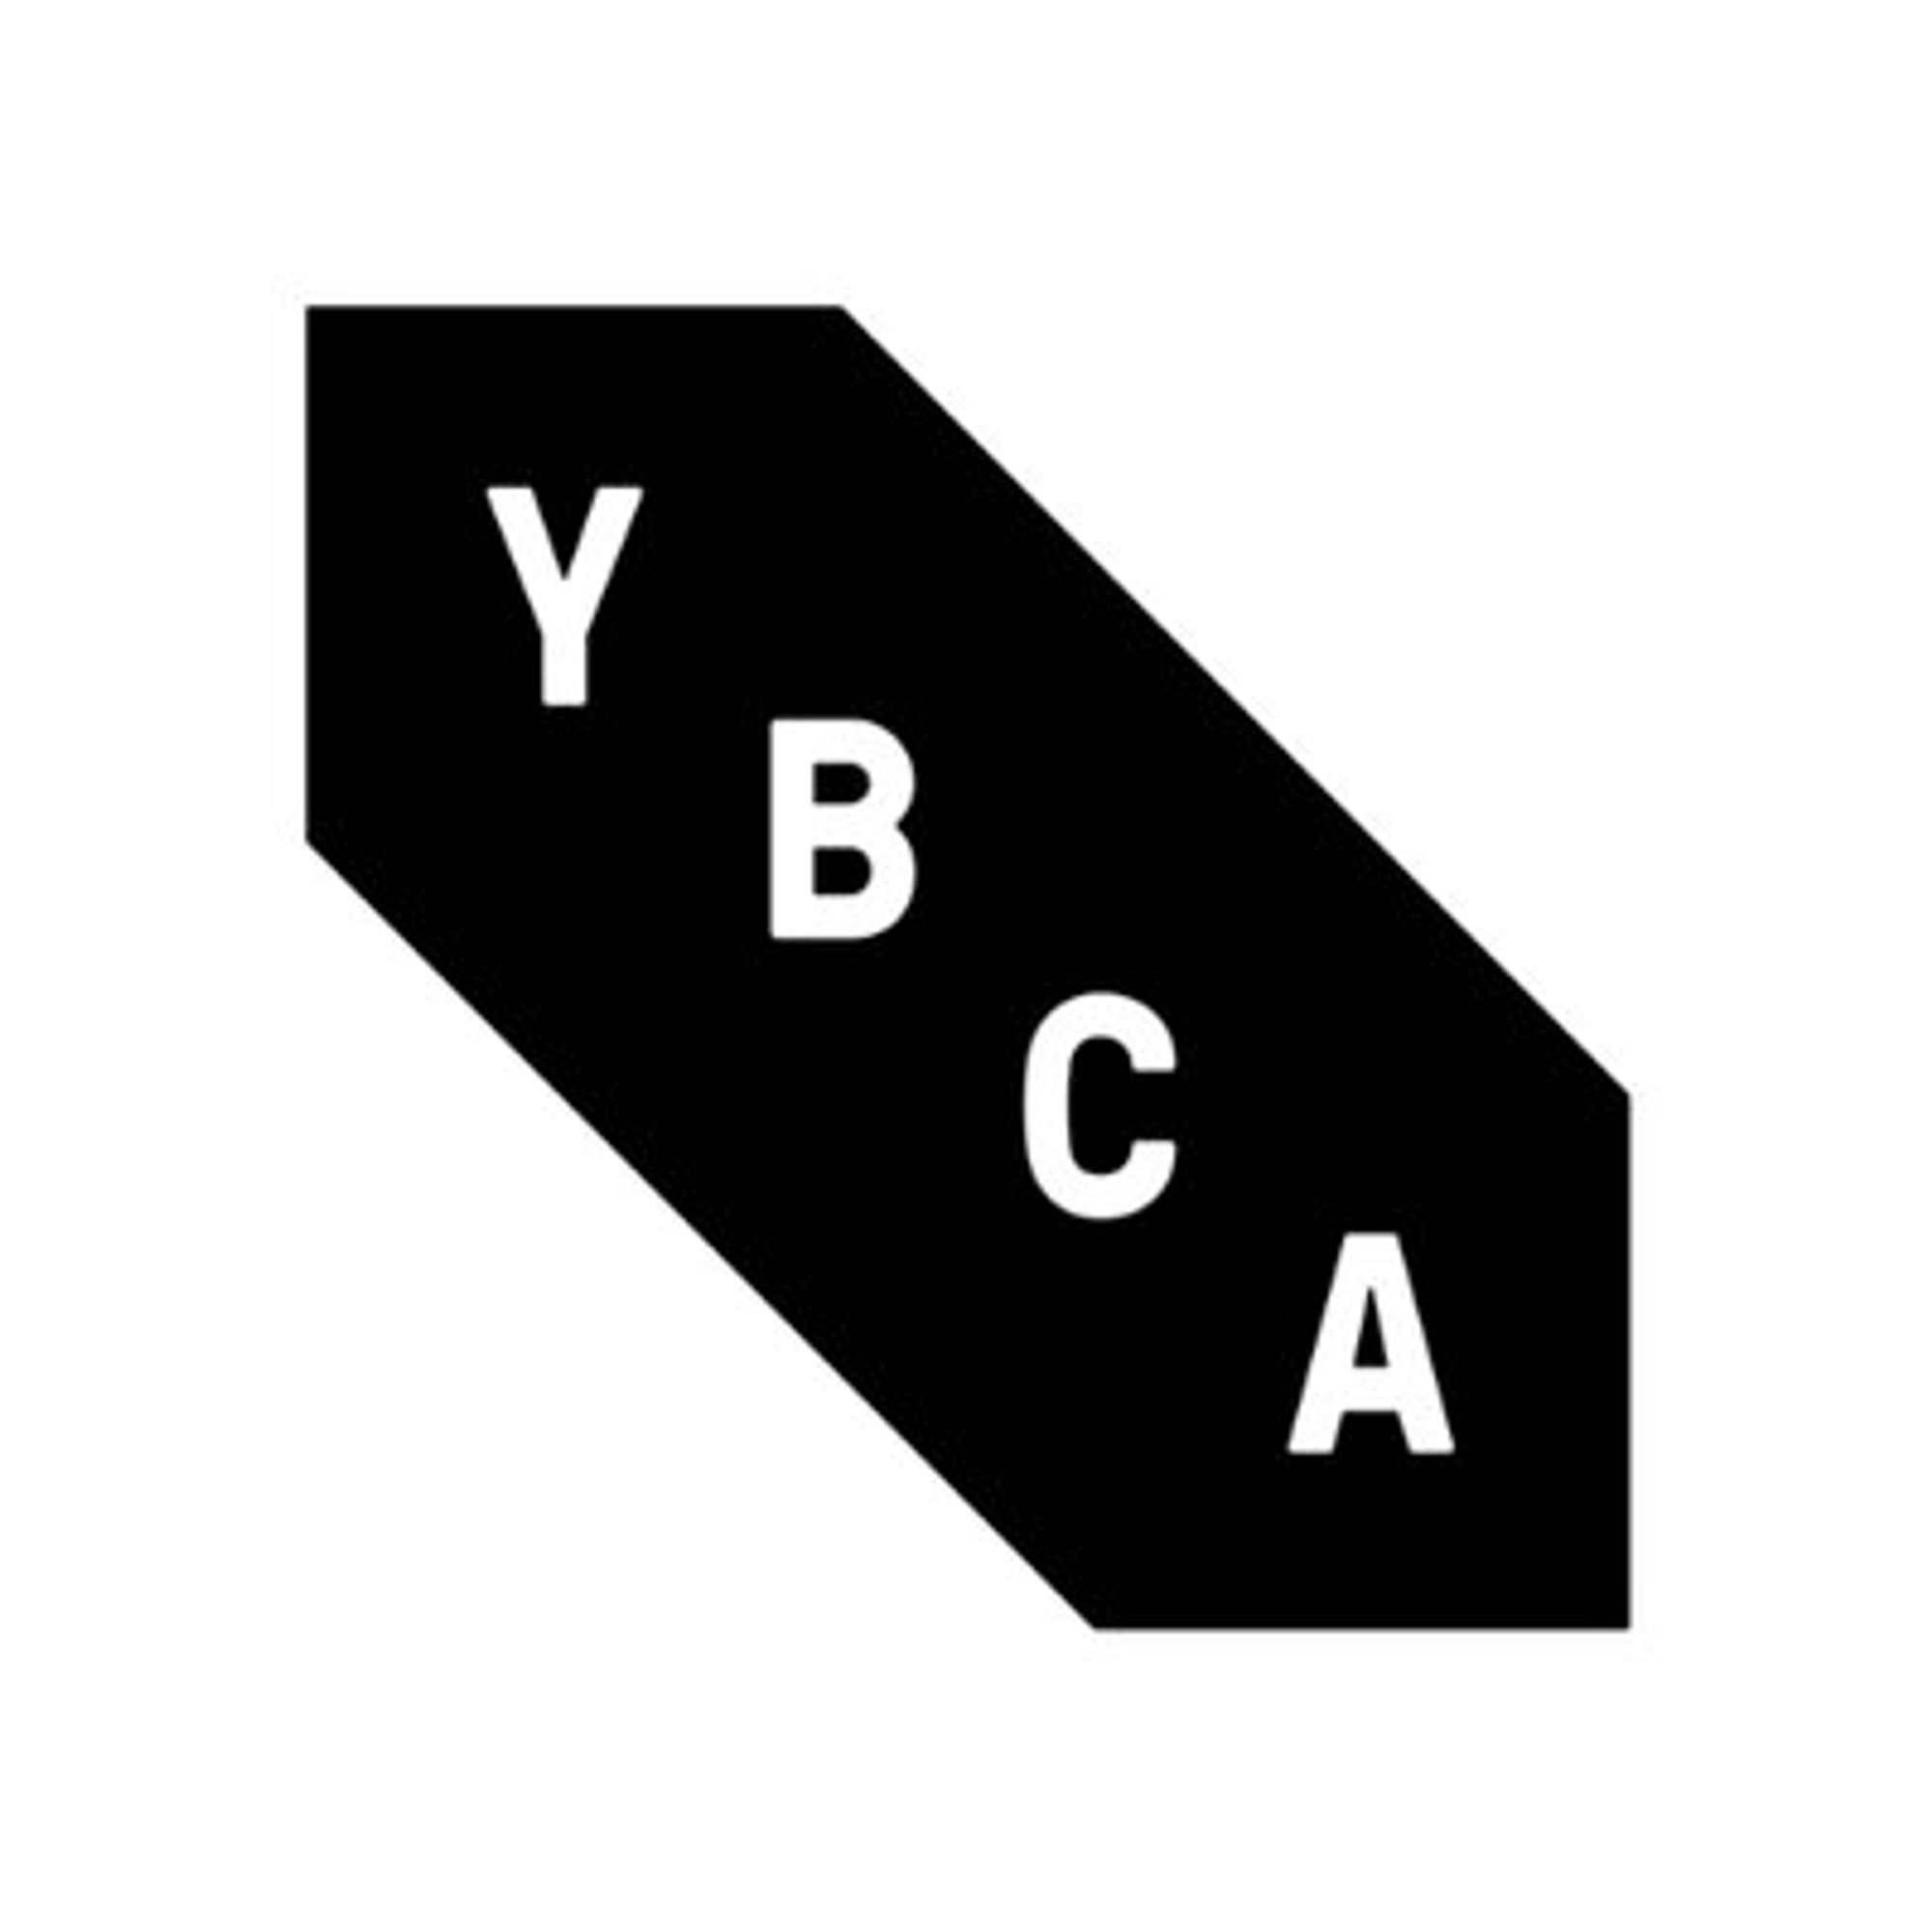 Yerba Buena Center for the Arts (YBCA)